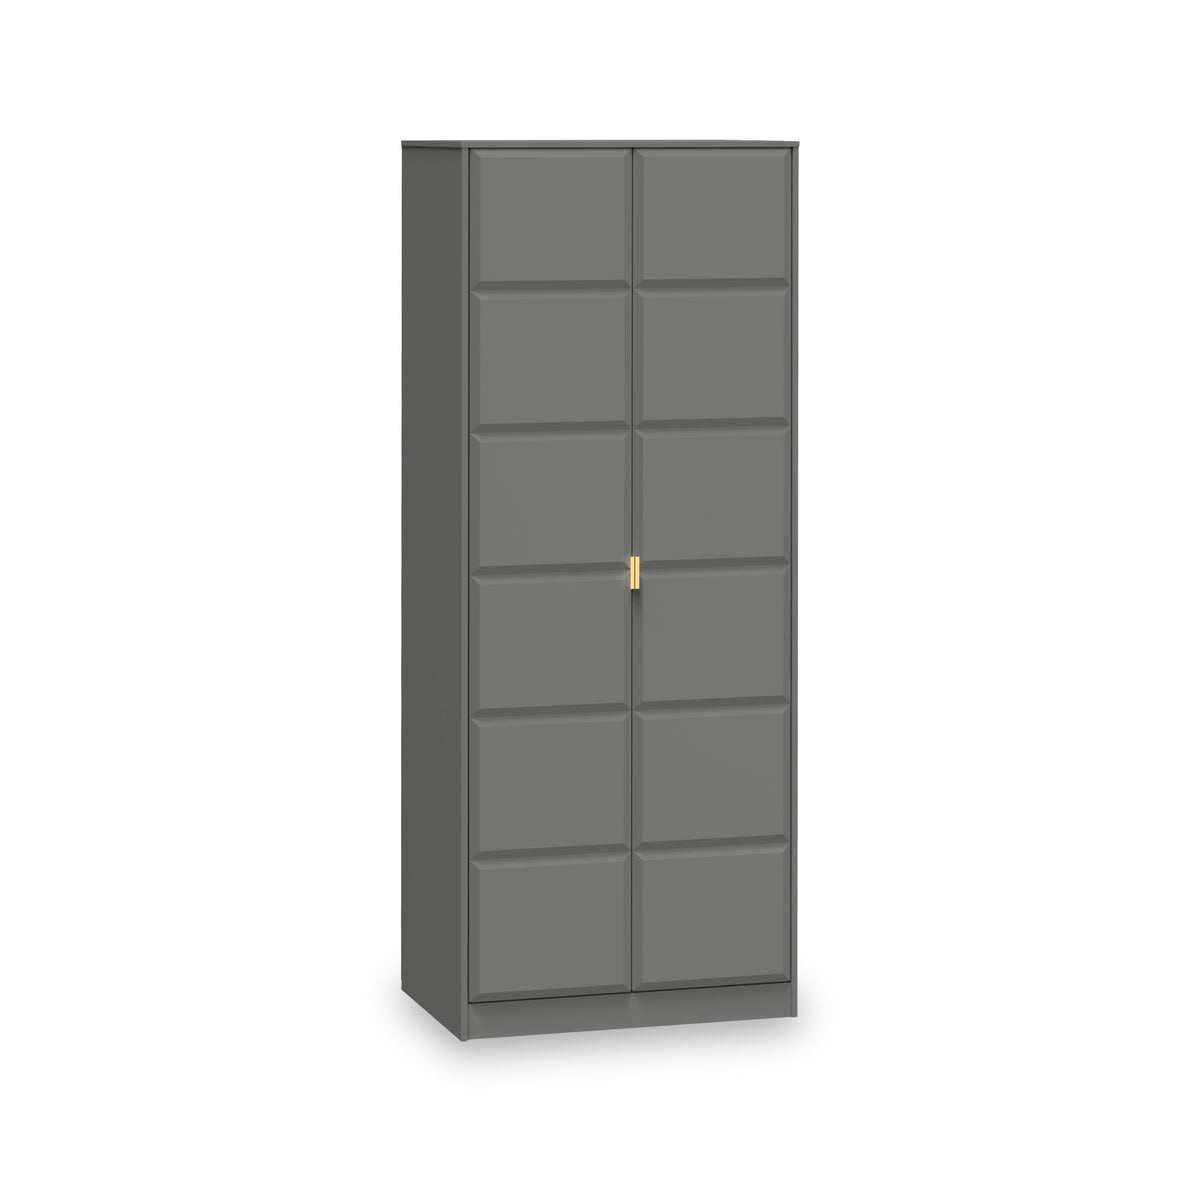 Harlow Grey 2 Door Panelled Wardrobe from Roseland